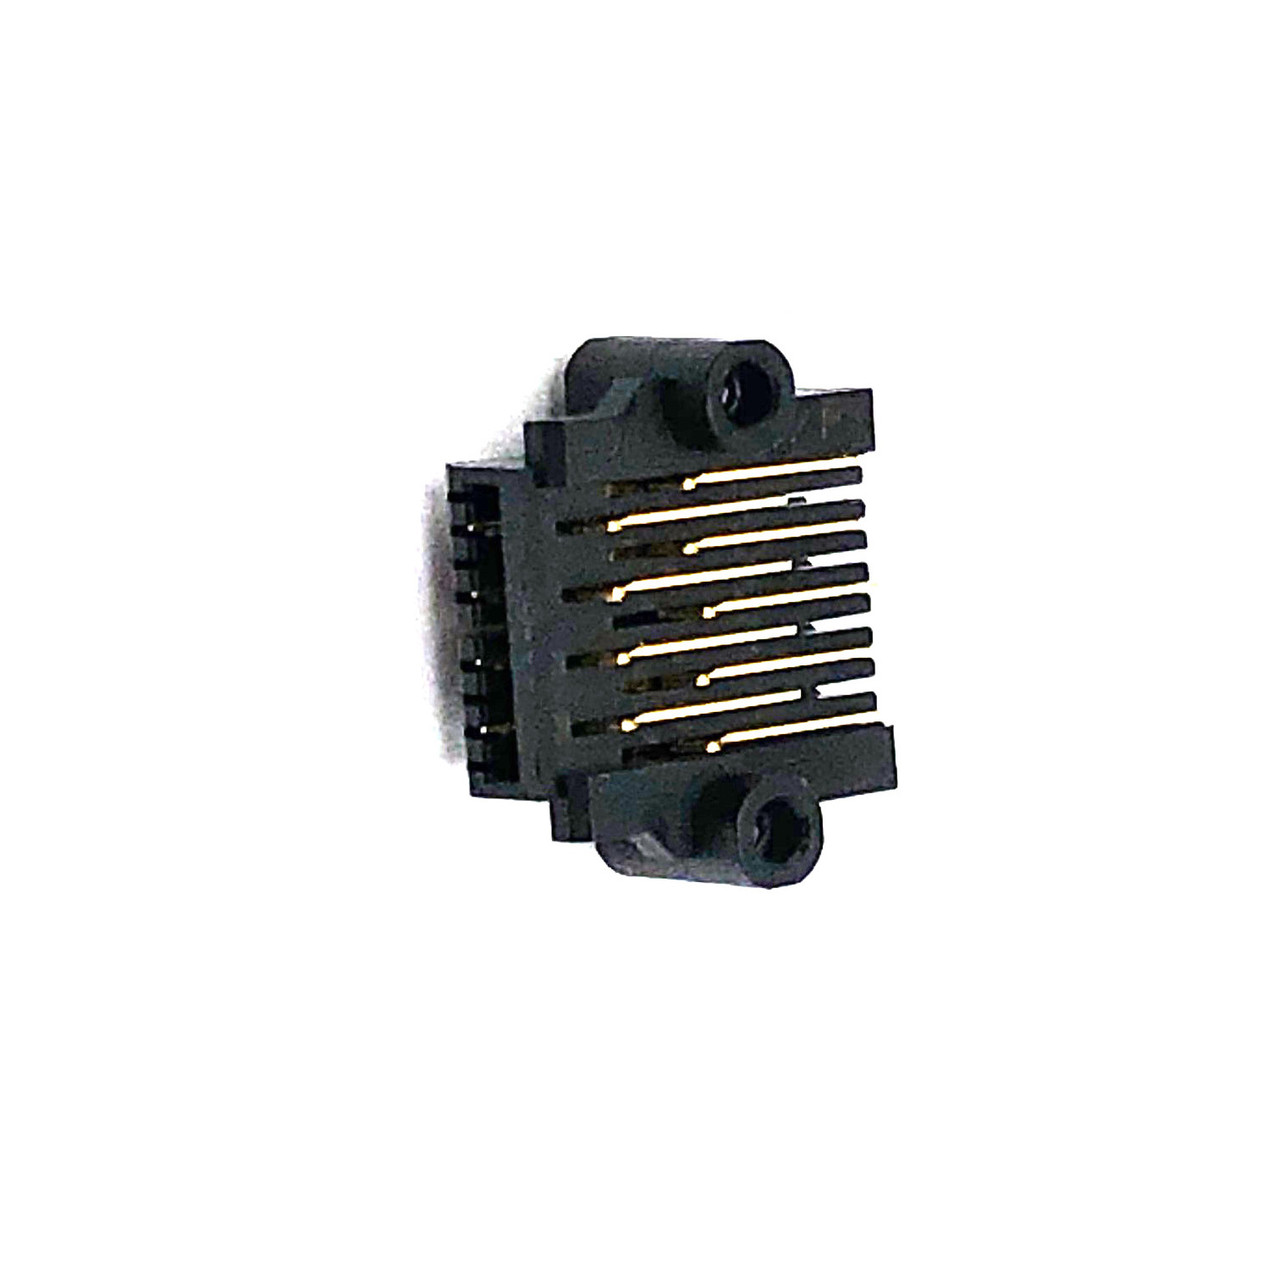 One Regular Epson Cartridge Chip Board CSIC Pins (9-pin): WorkForce,  Expression, XP, WF - BCH Technologies